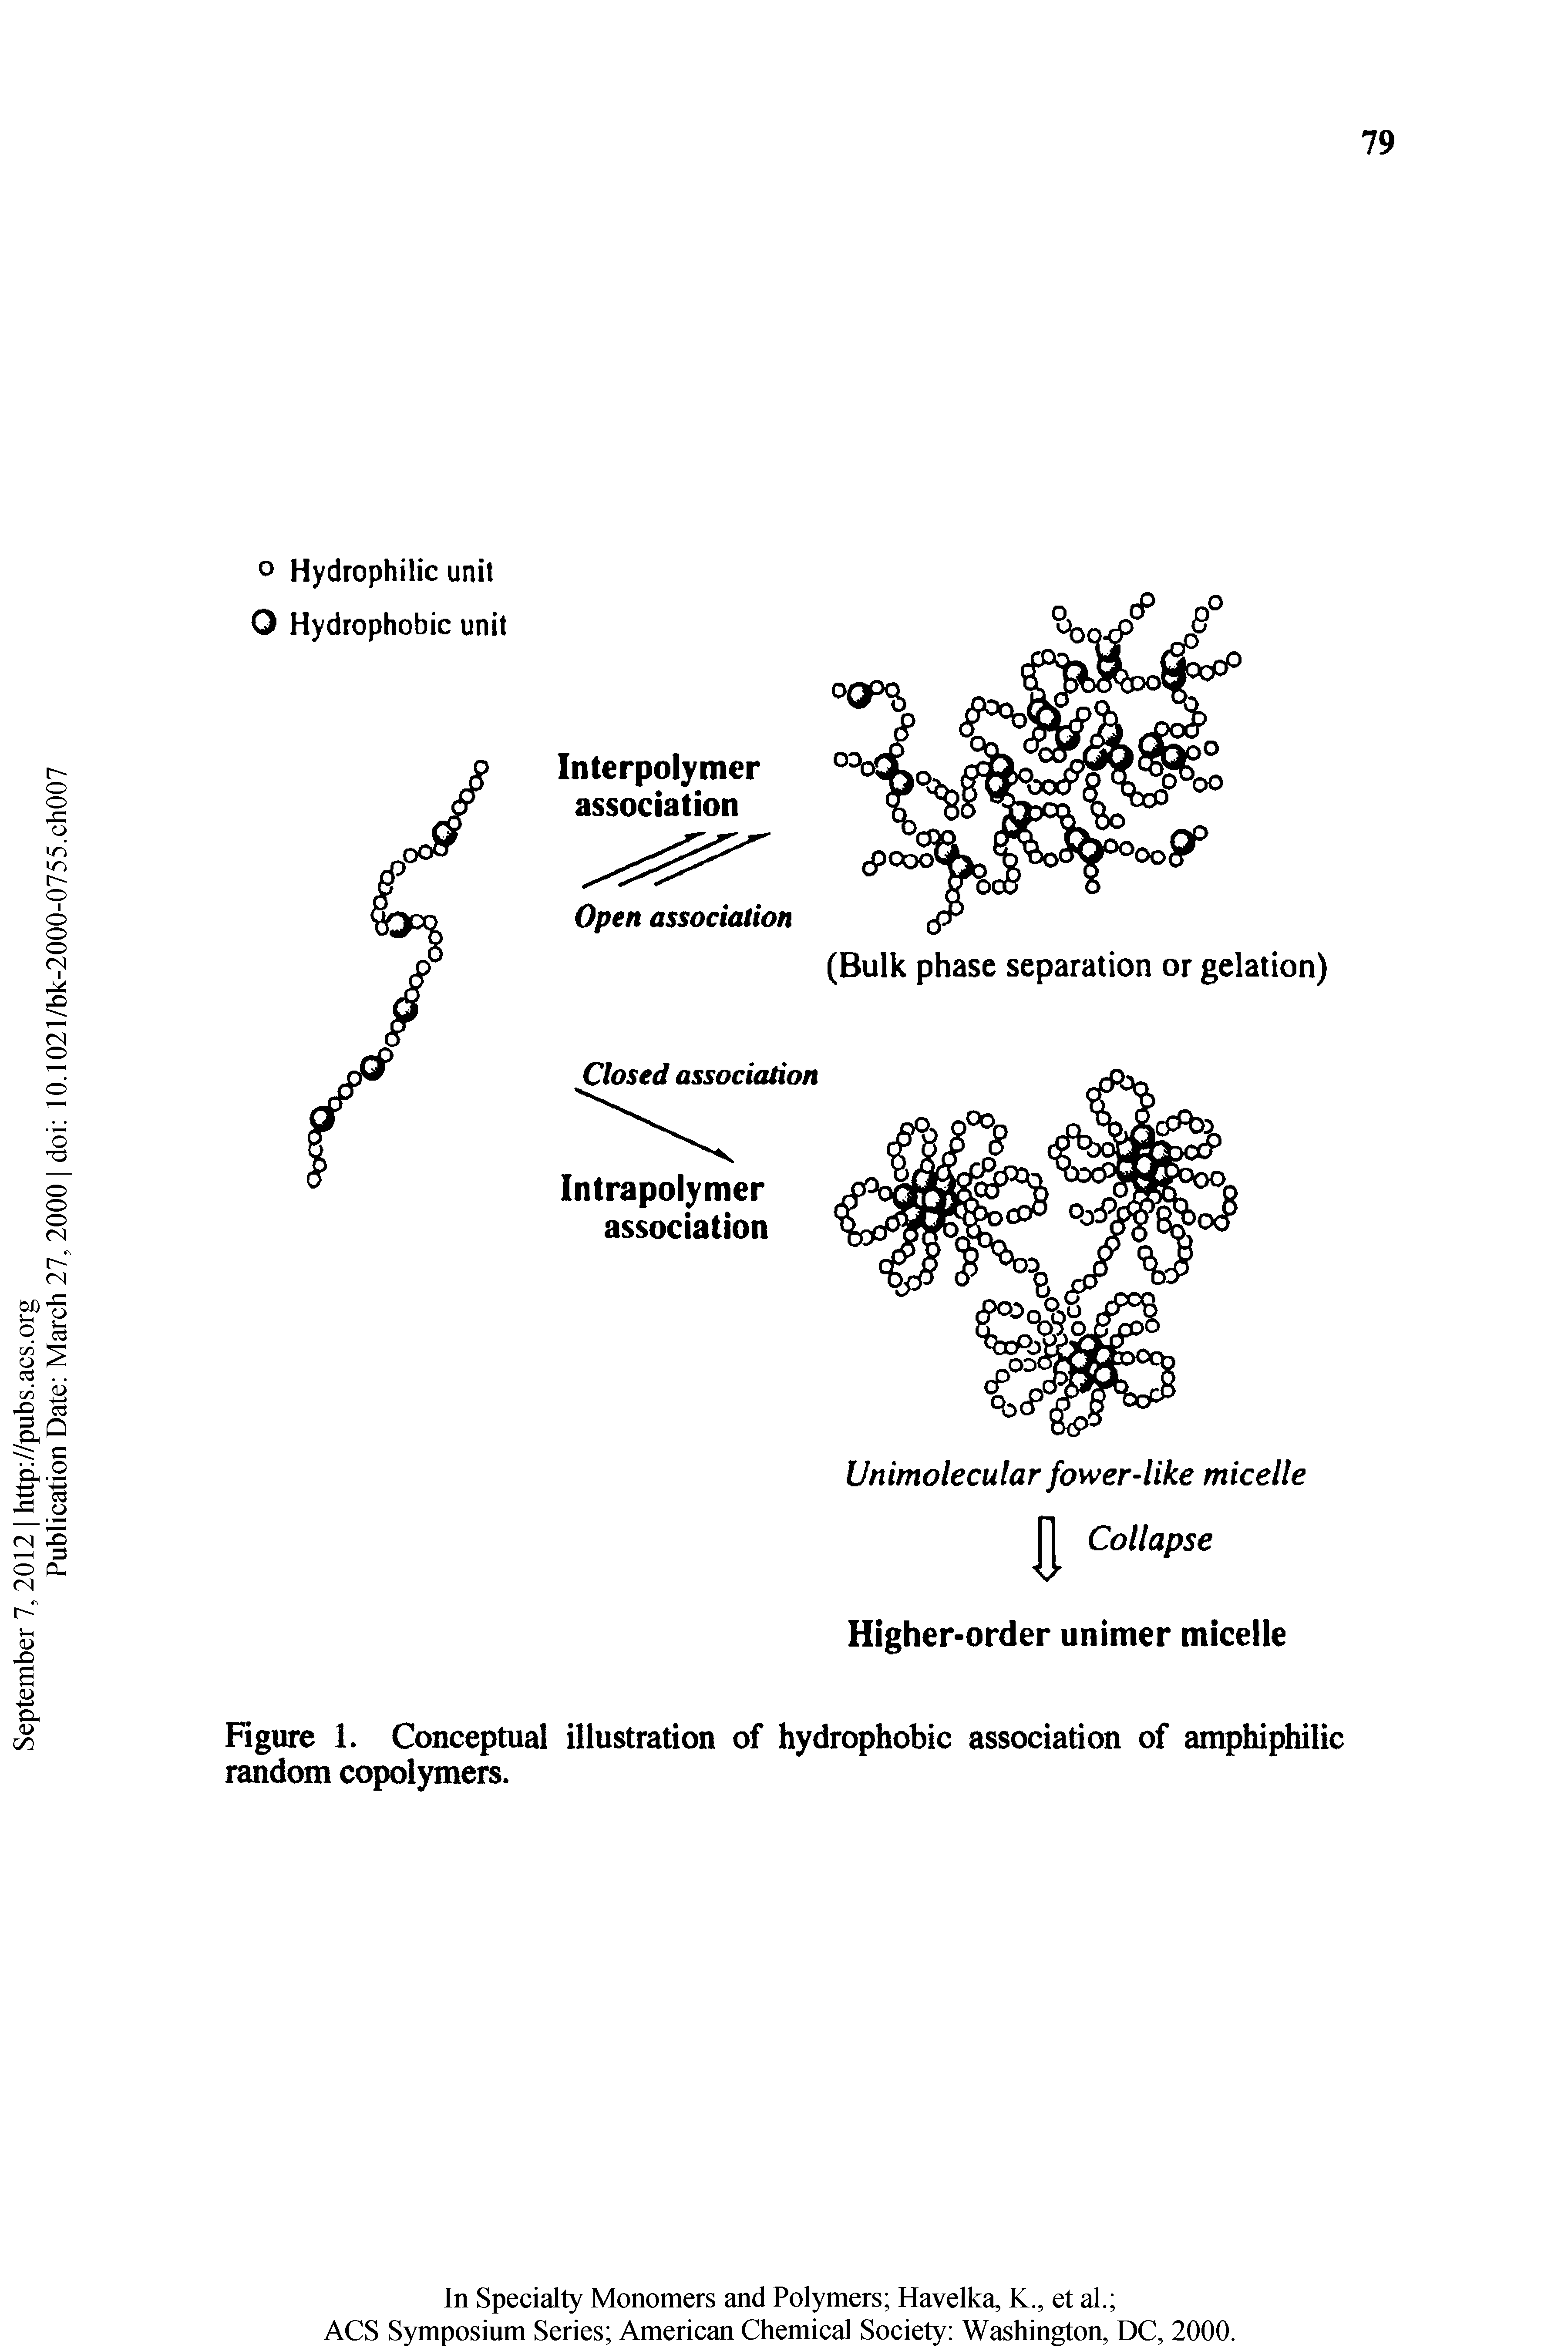 Figure 1. Conceptual illustration of hydrophobic association of amphiphilic random copolymers.